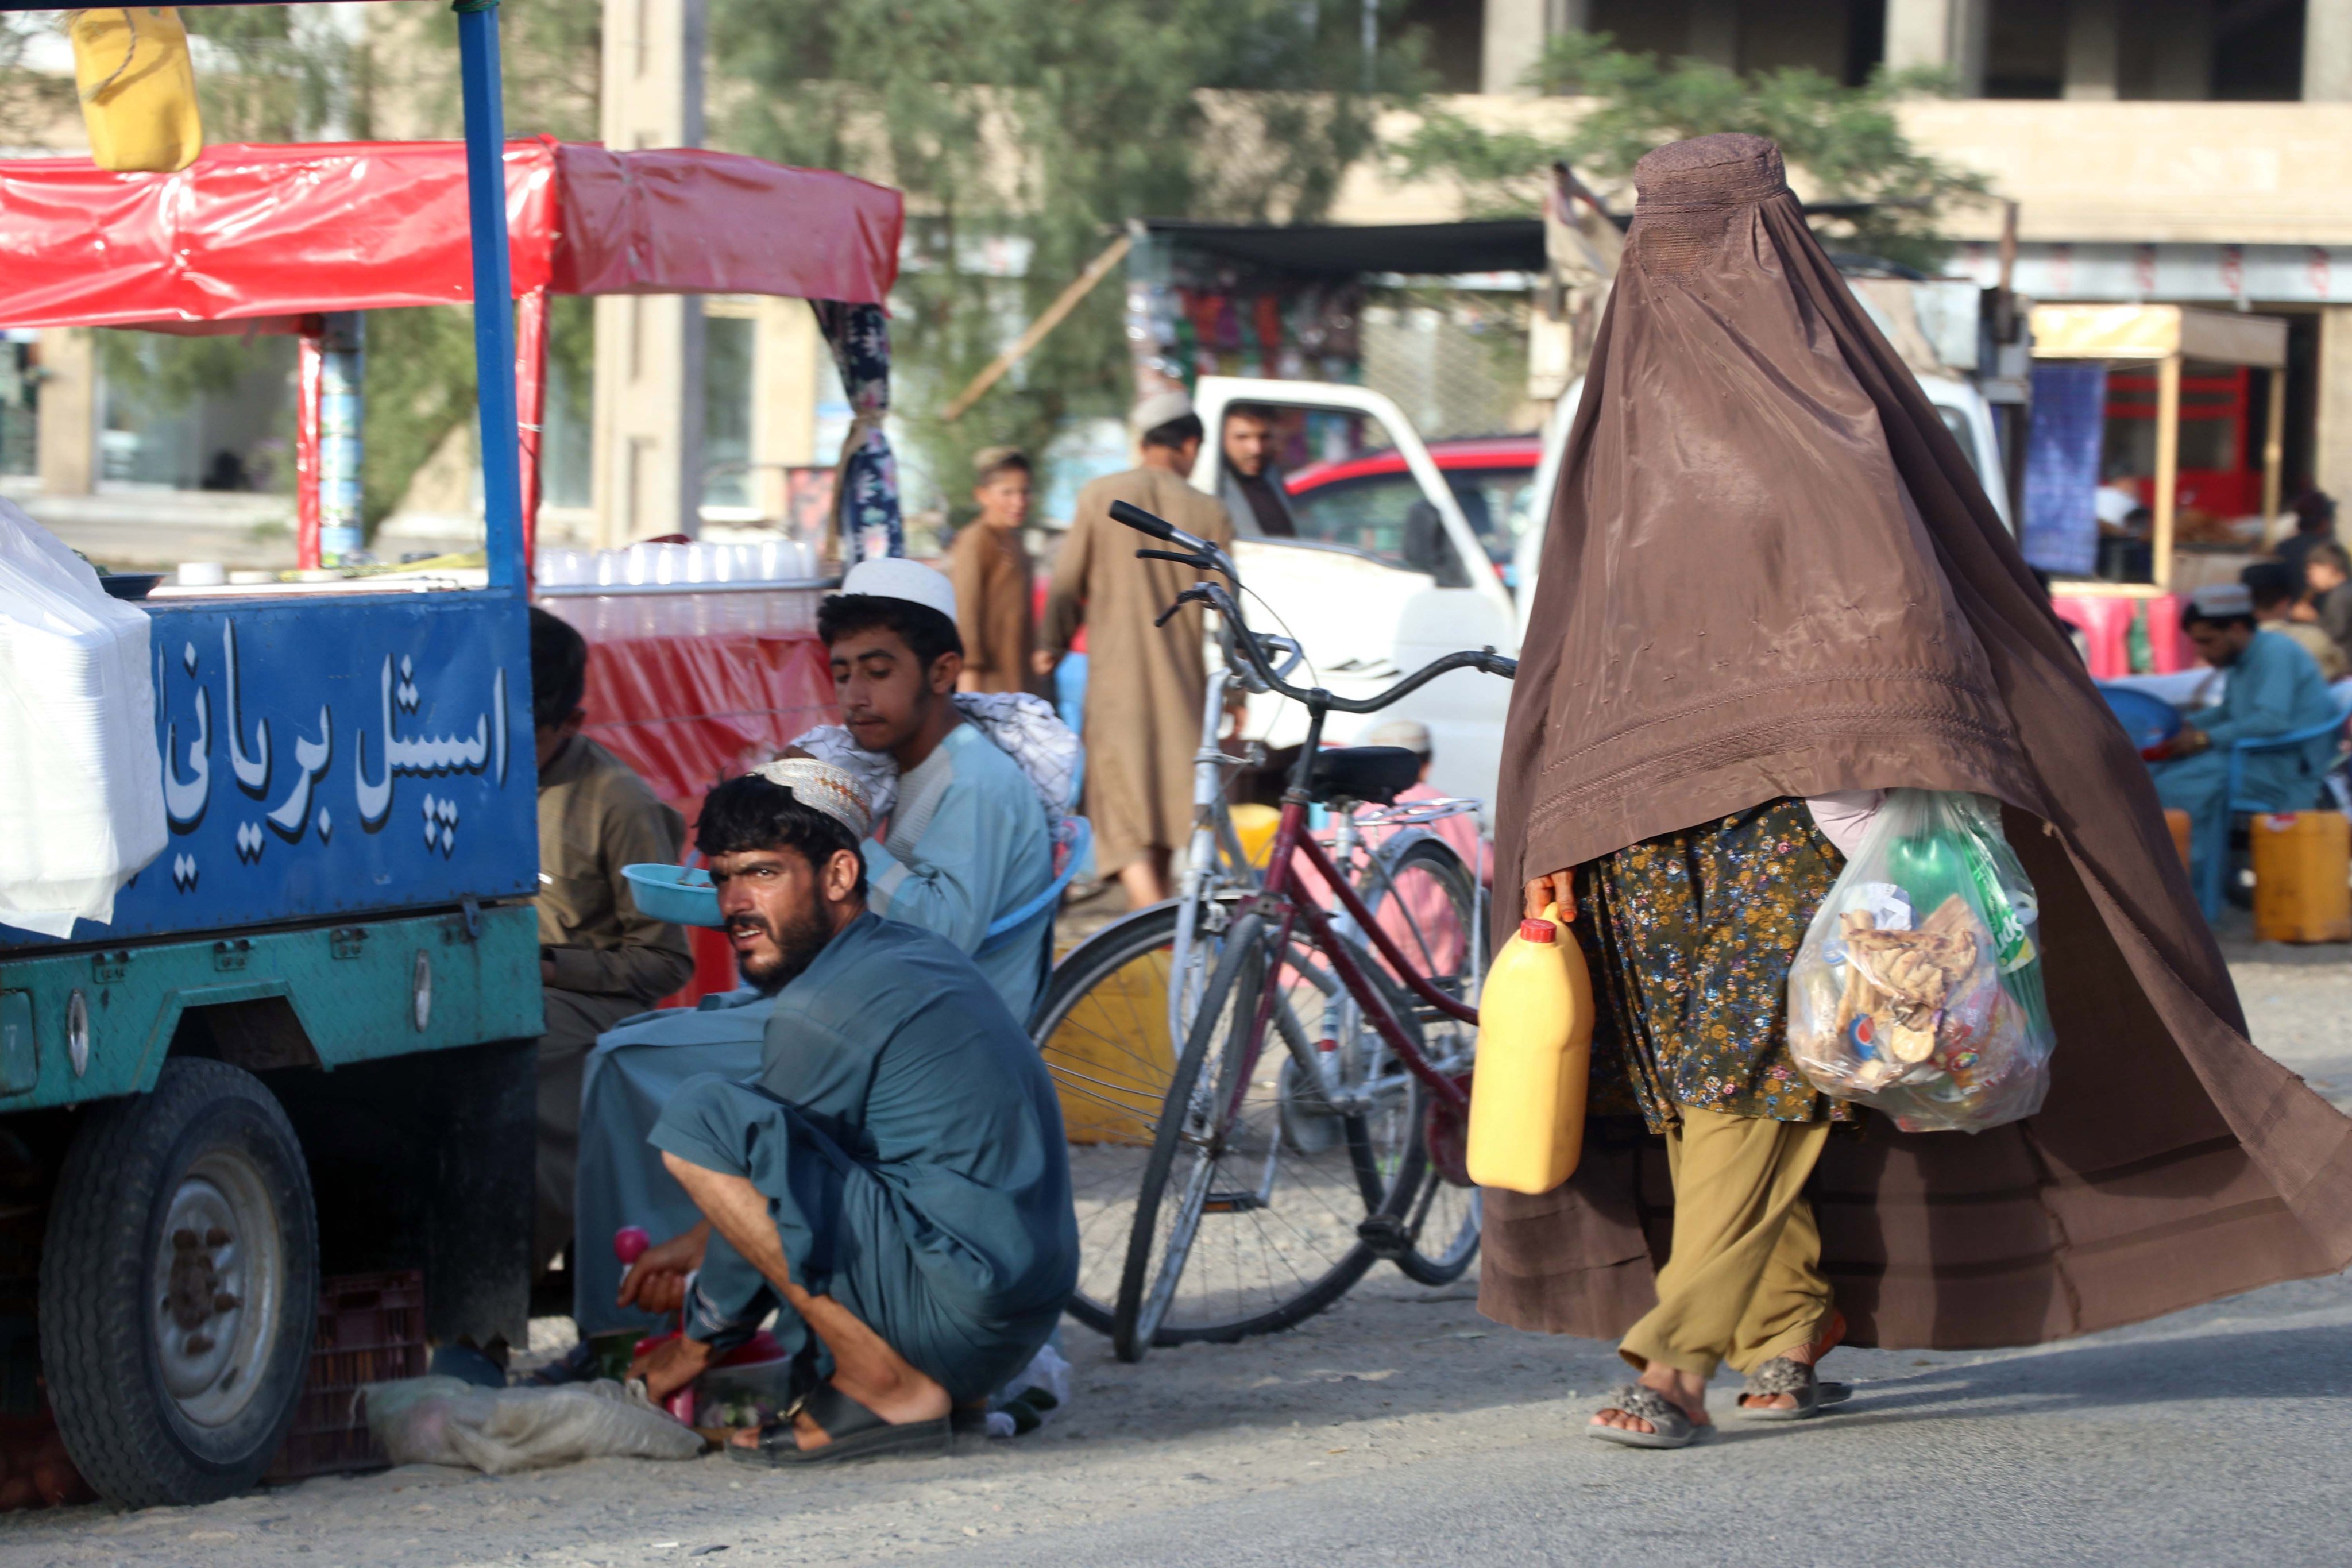 A burqa-clad Afghan woman walks past a roadside food vendor in Kandahar this month. Photo: EPA-EFE